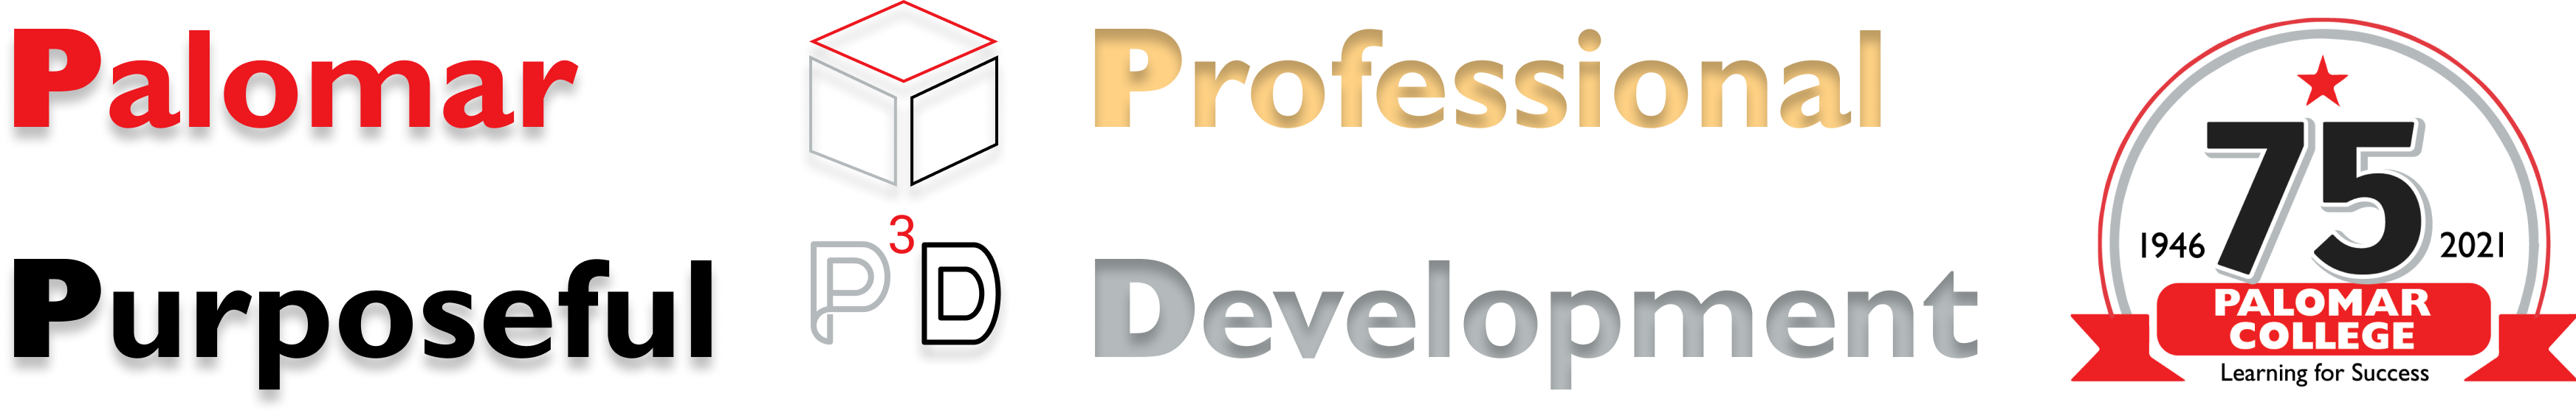 Palomar Purposeful Professional Development new logo